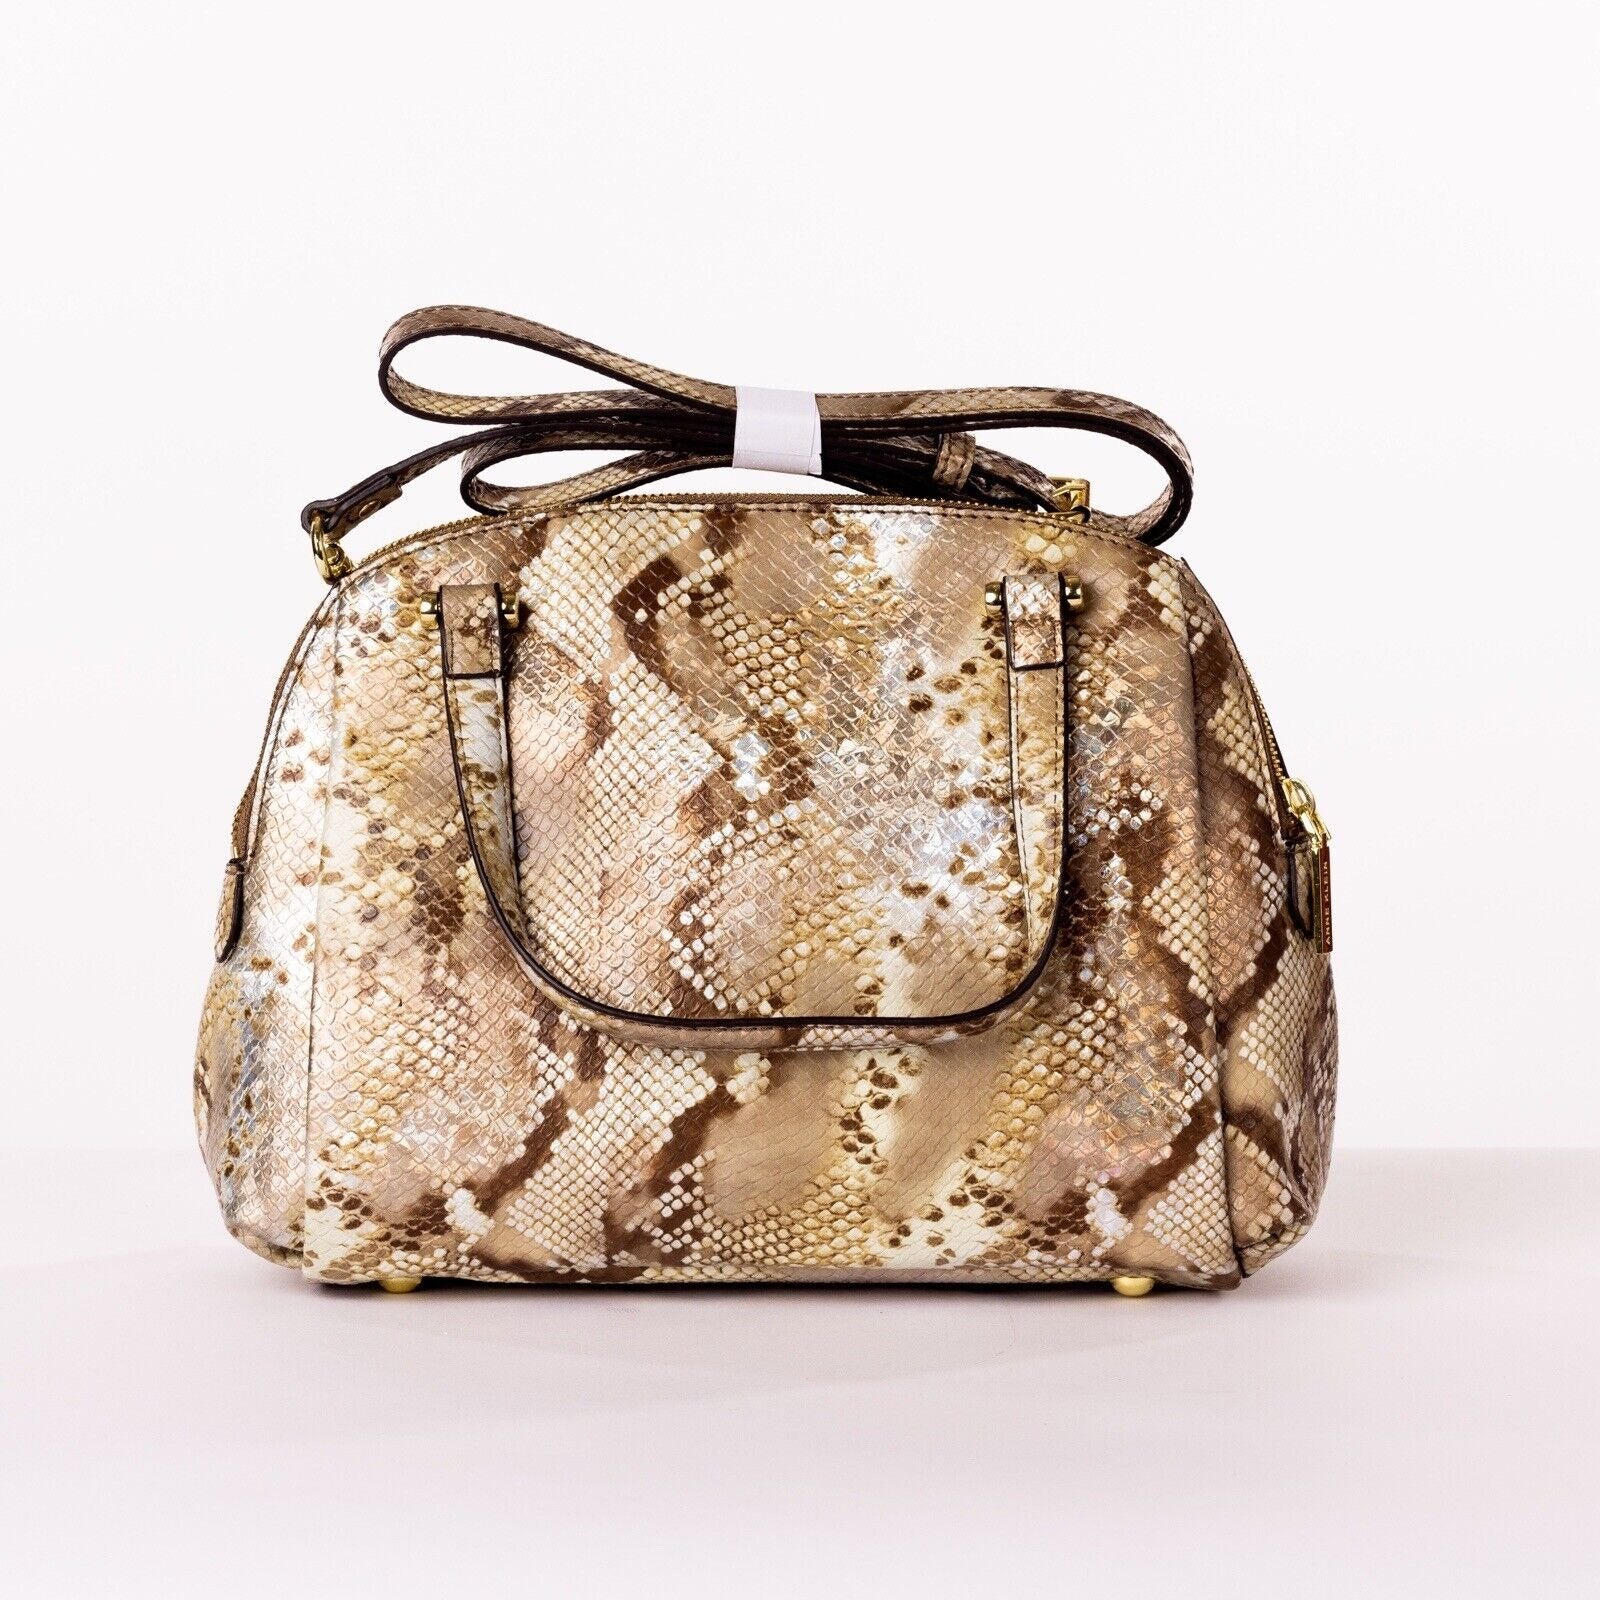 Brown Python Printed Handbag with Gold Hardware And Adjustable Strap